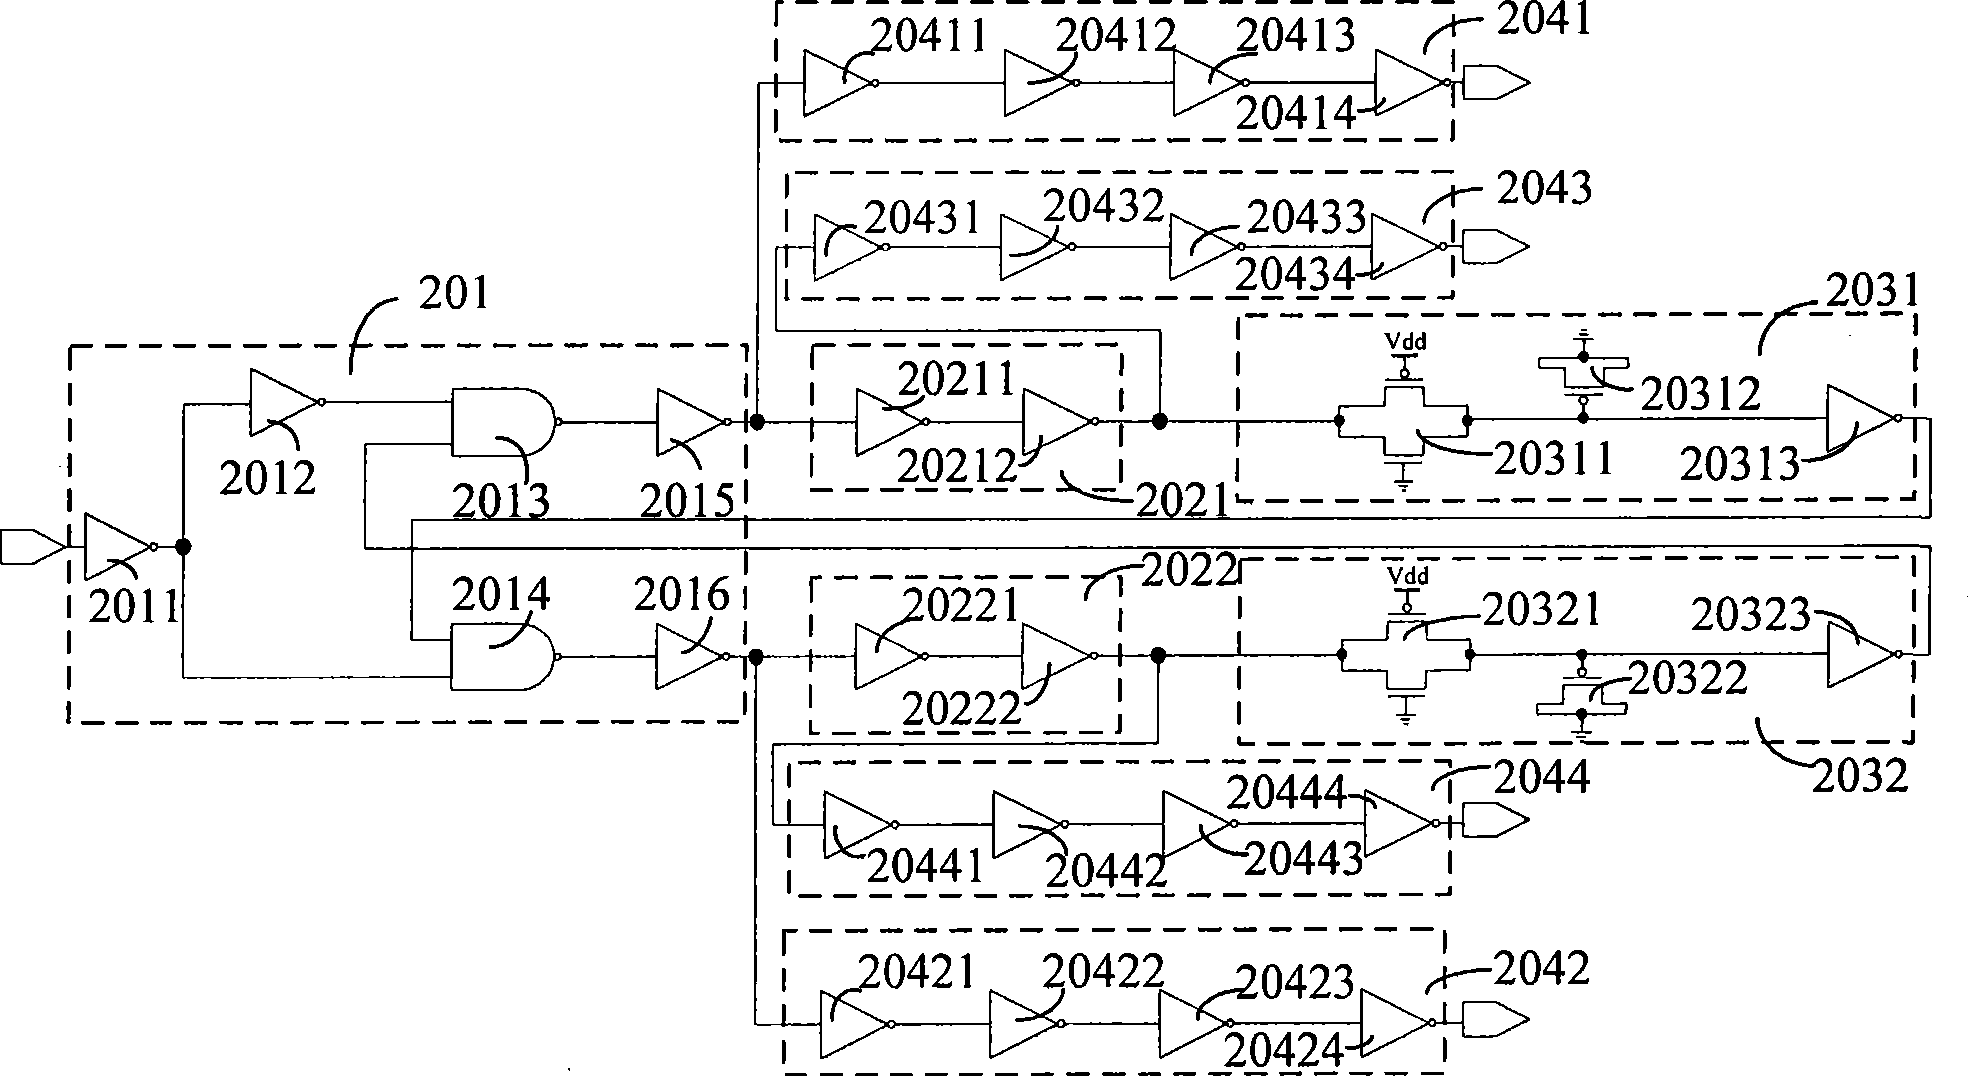 Time clock generating circuit and design method